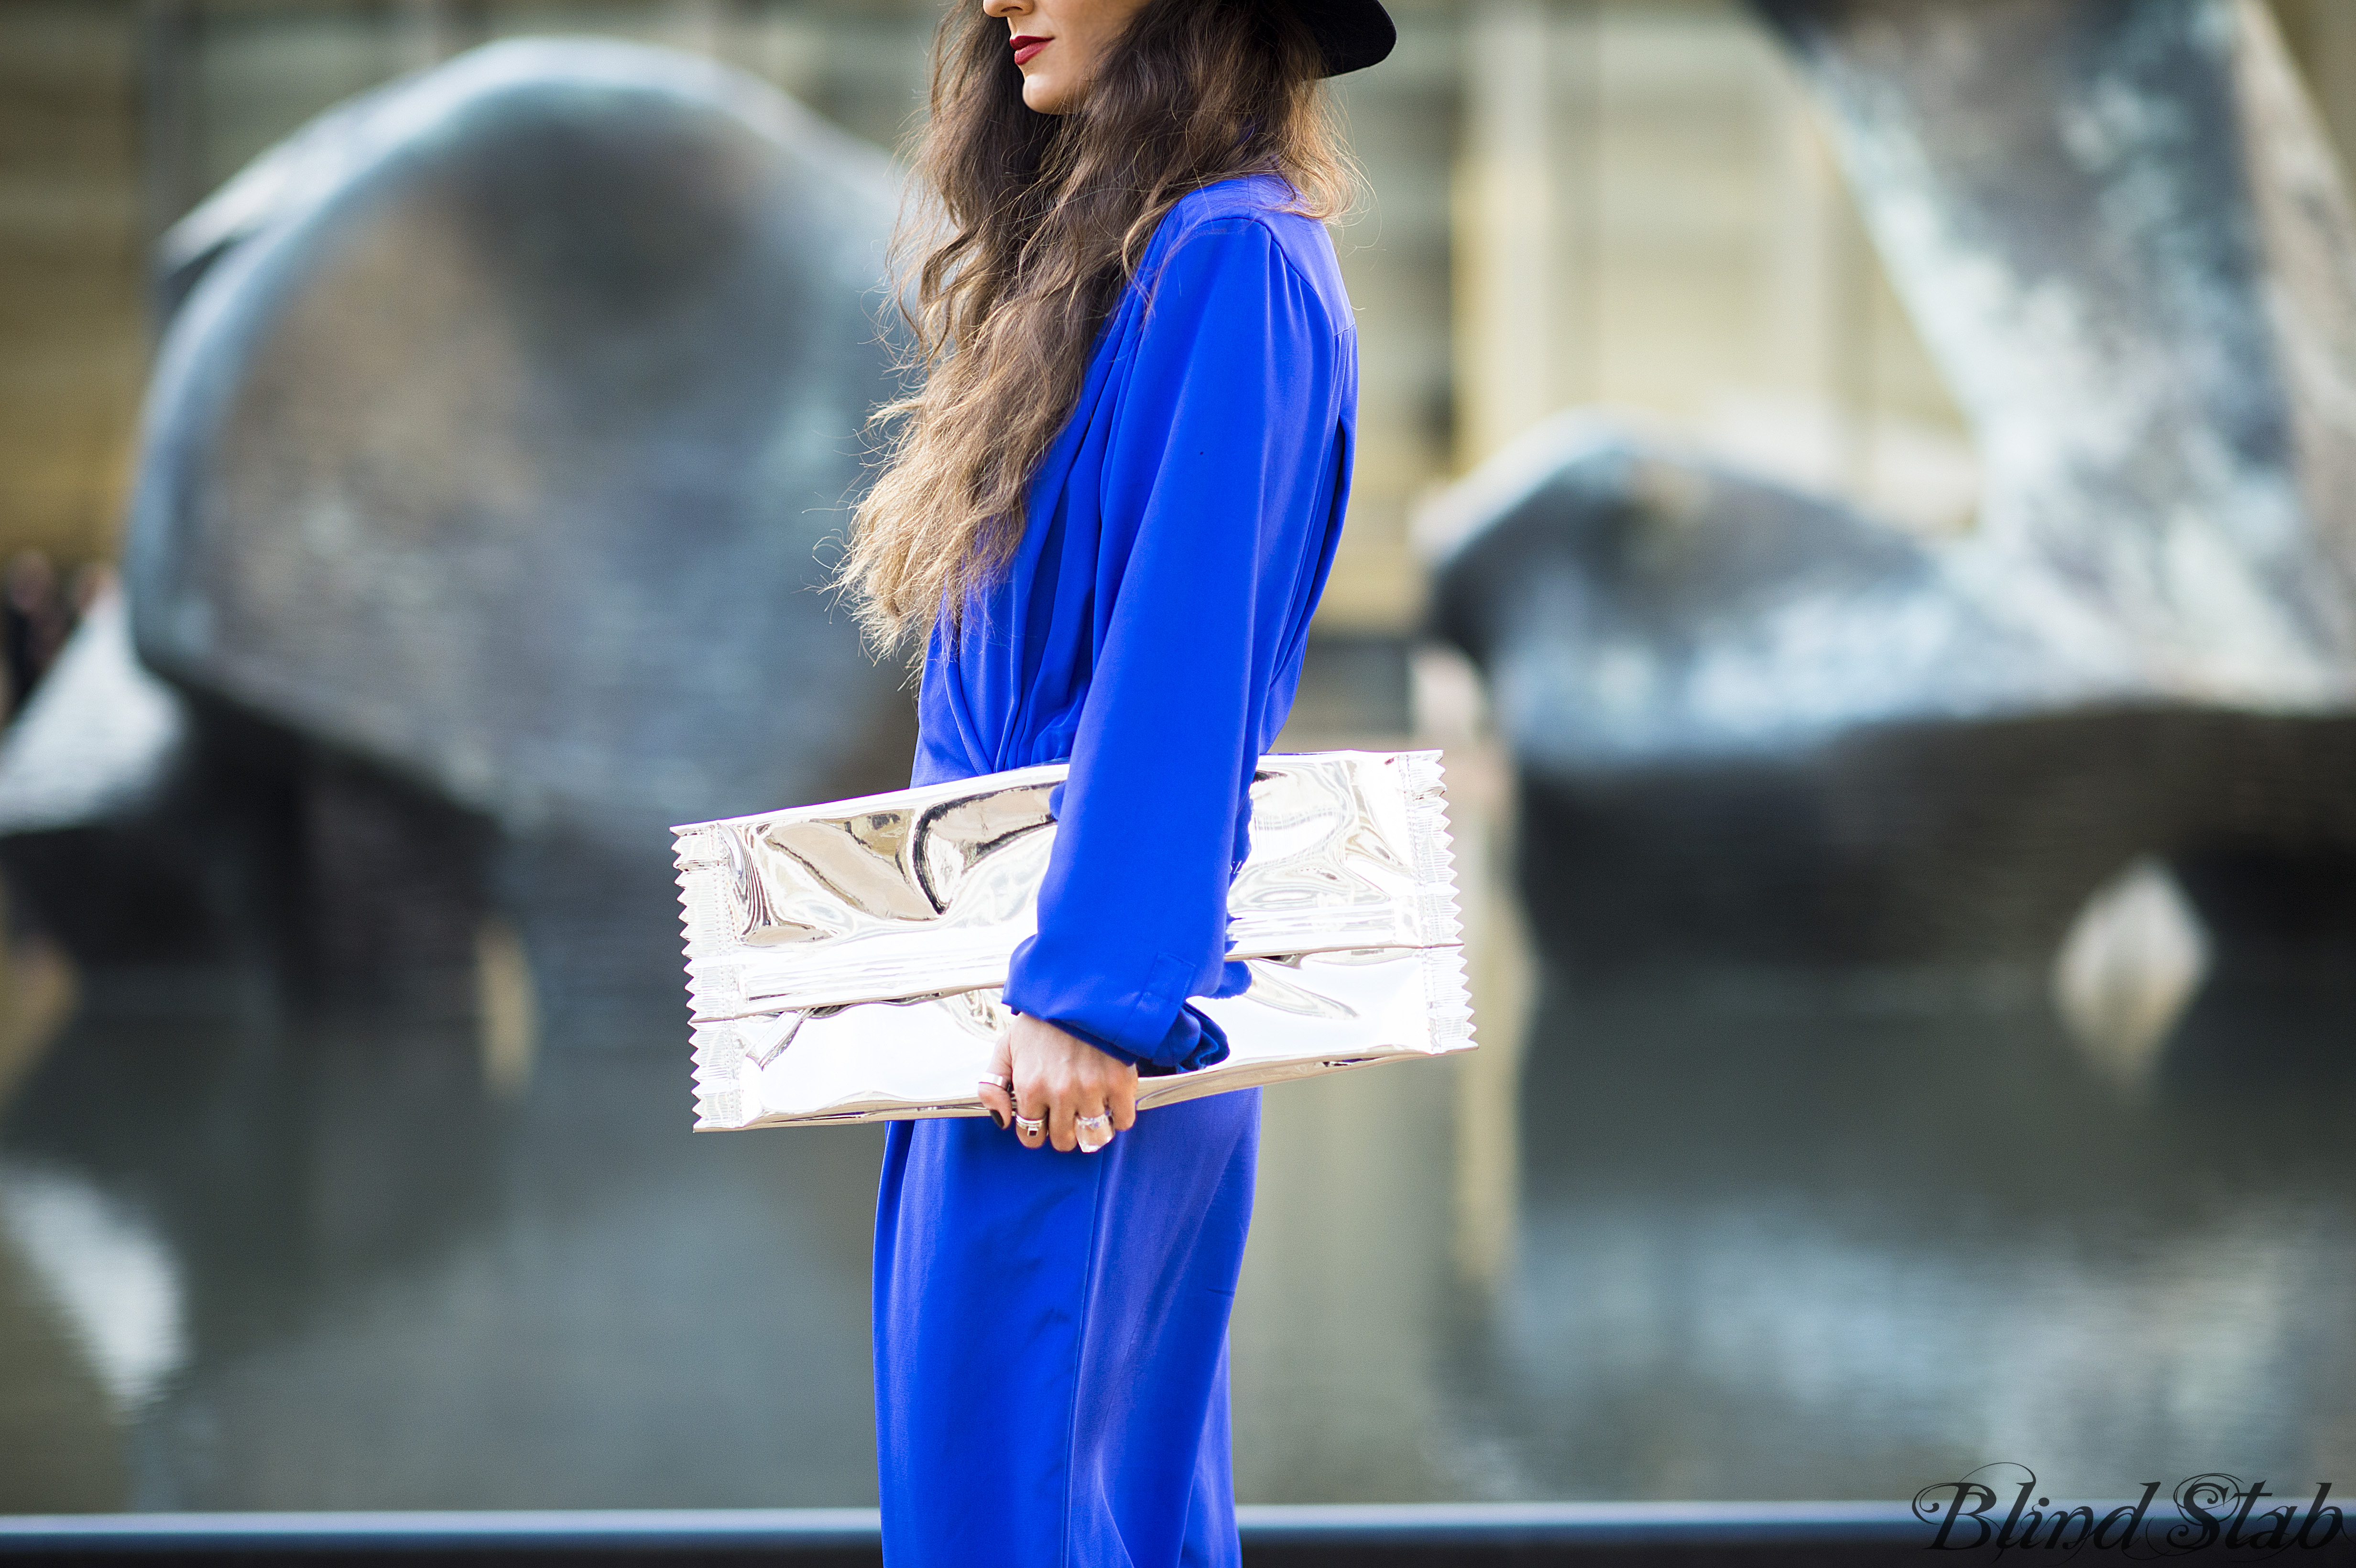 Blue-Jumpsuit-Wide-Brim-Hat-NYC-Street-Style